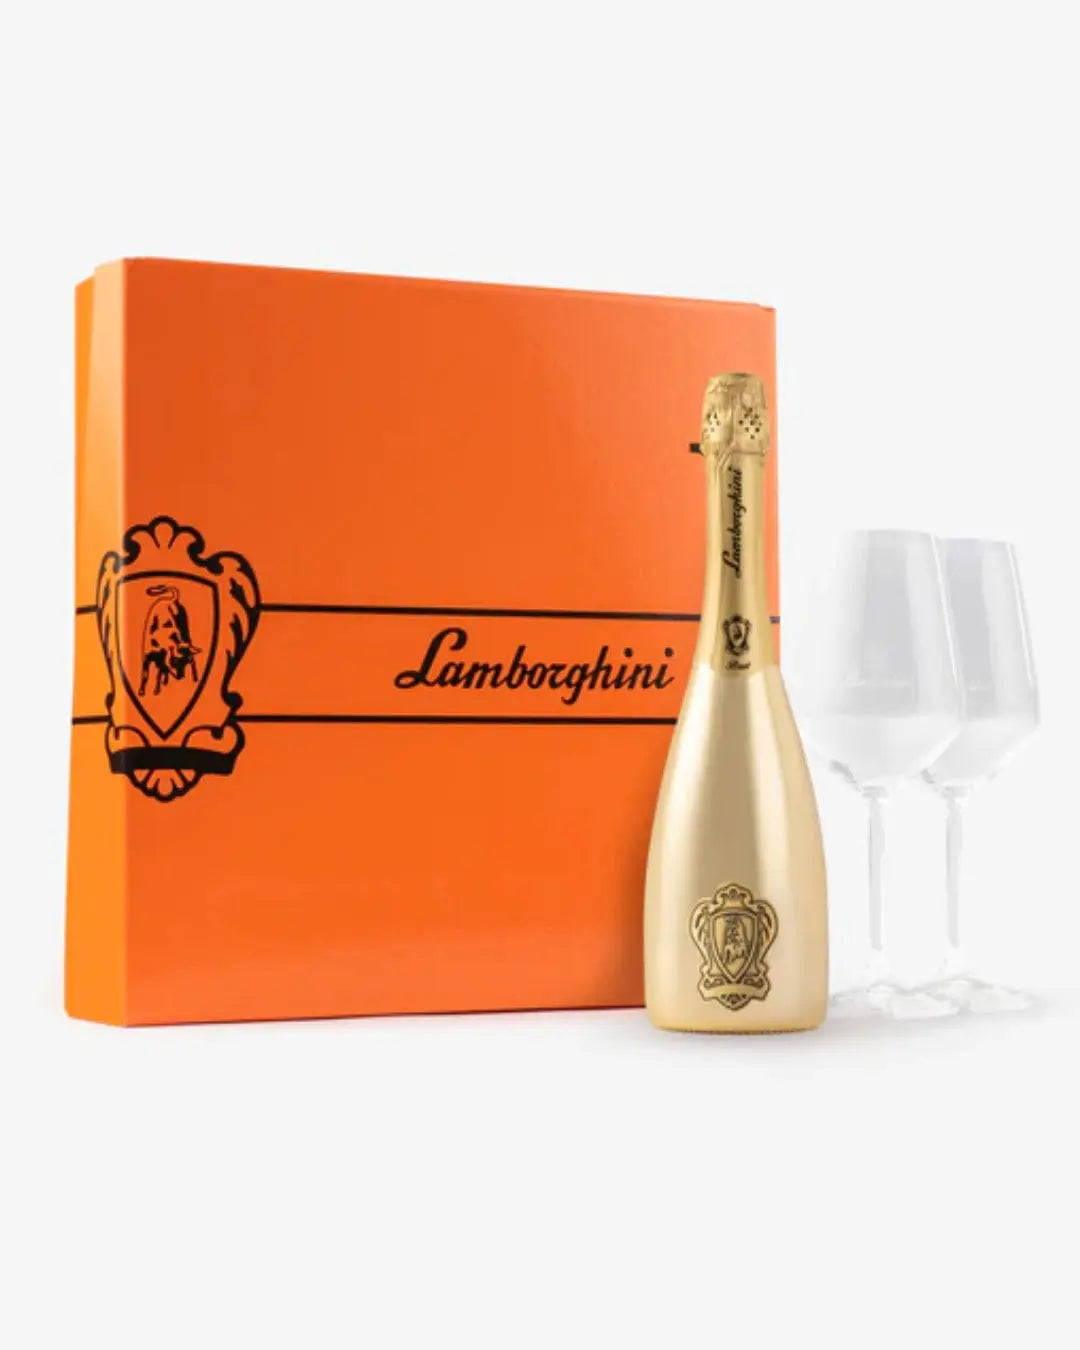 Lamborghini Gold Brut Sparkling Wine Gift Set With 2 Crystal Glasses, 75 cl Champagne & Sparkling